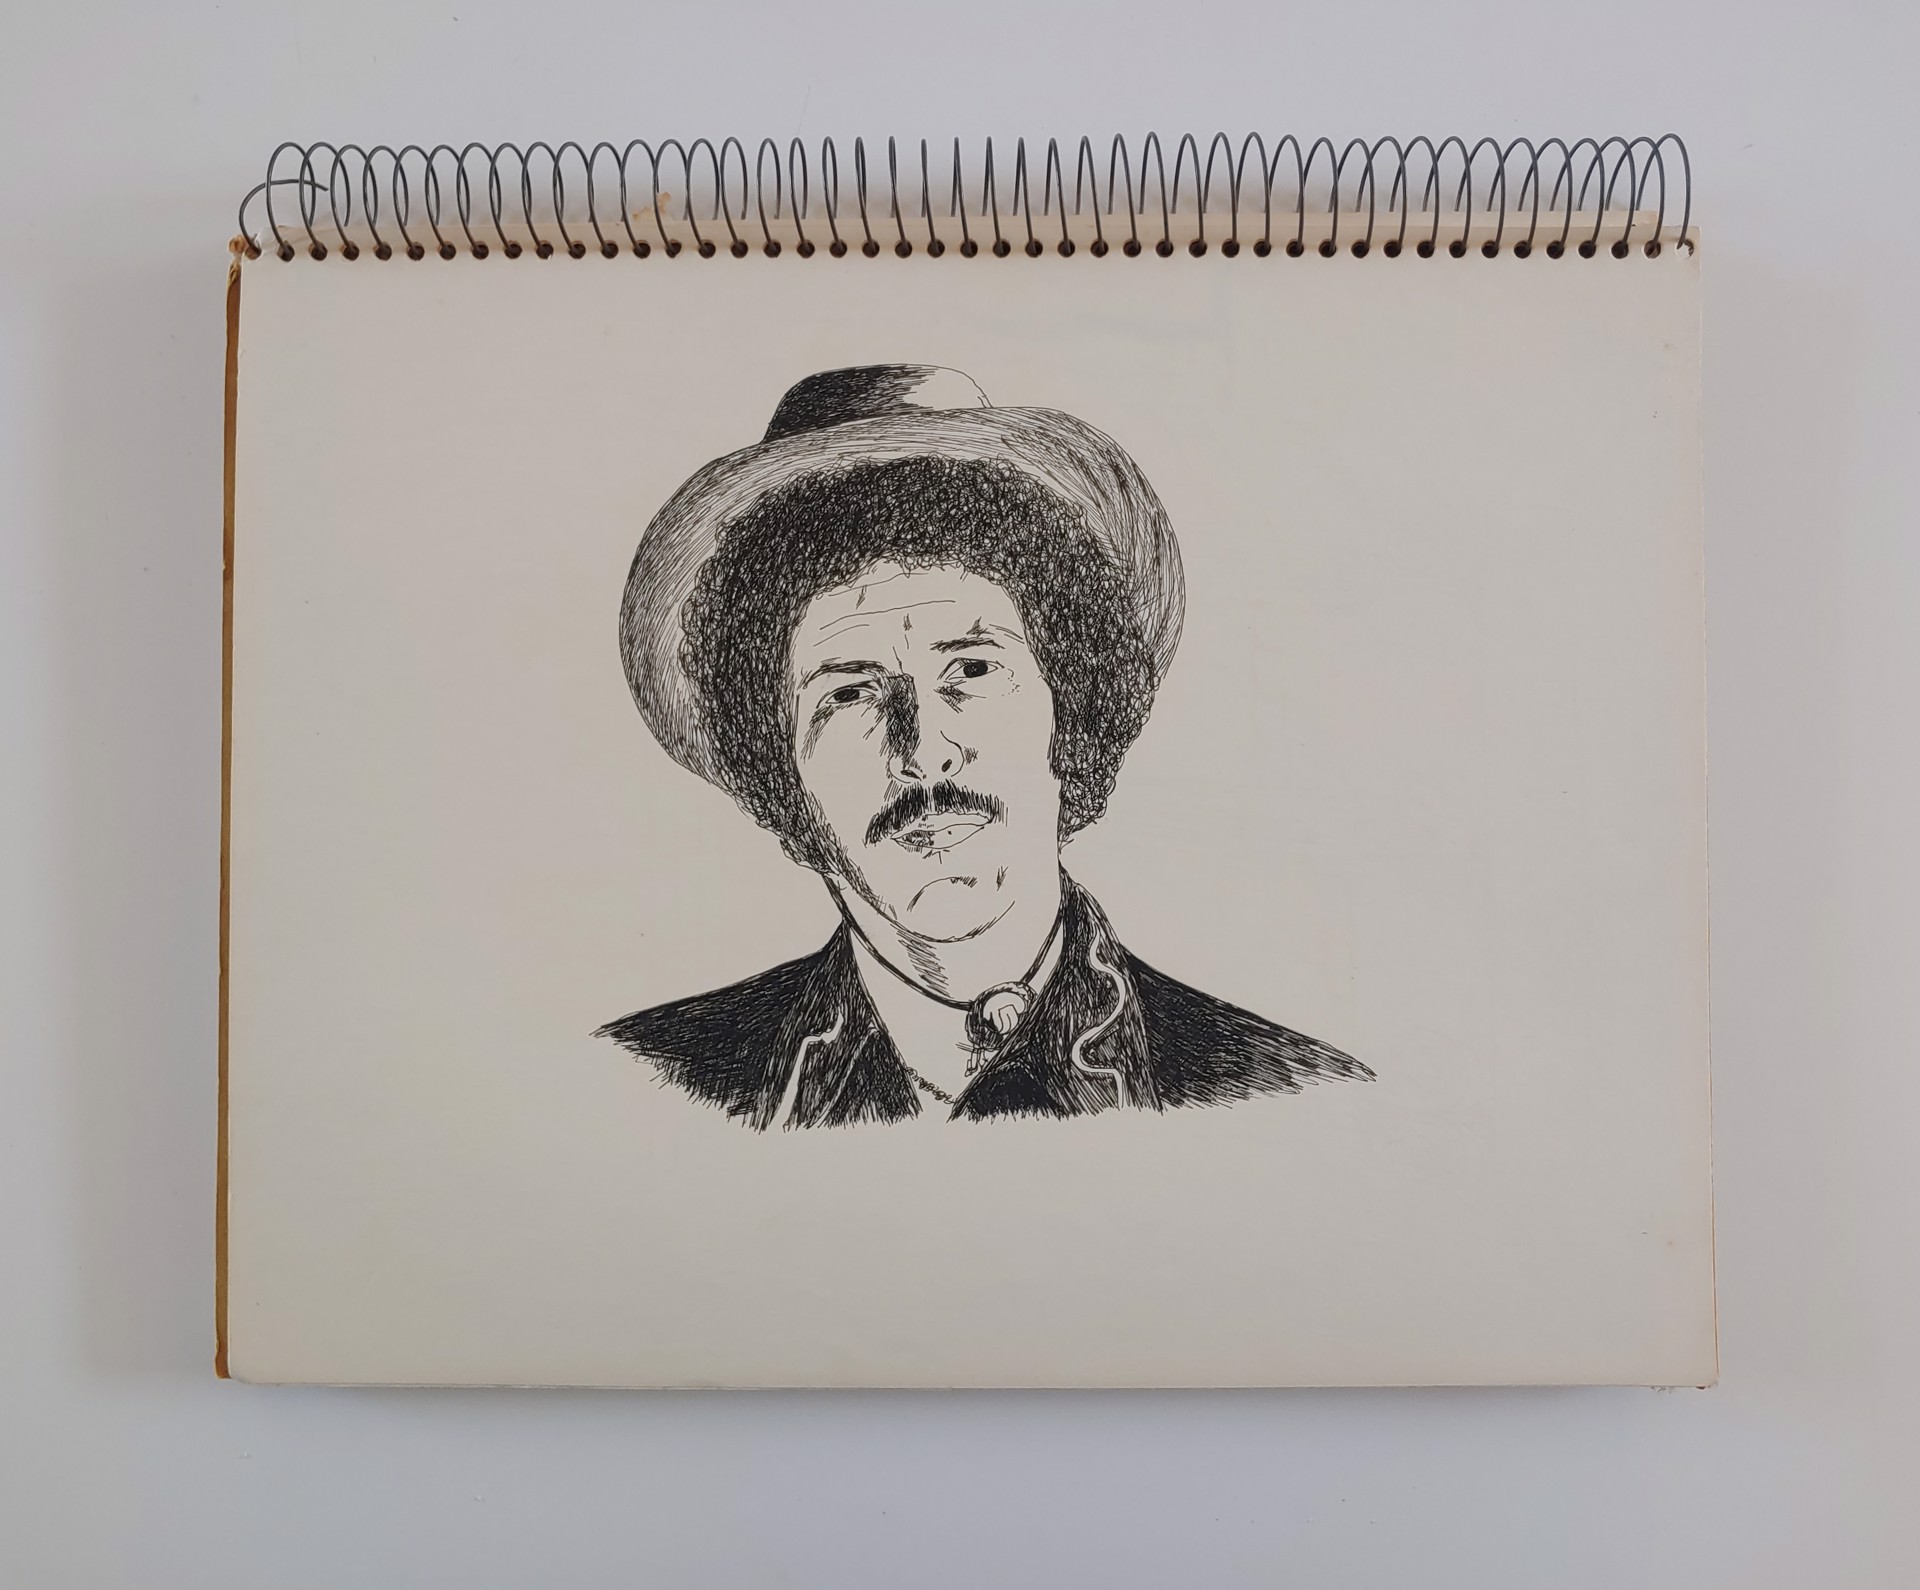 February 1973 Sketchbook by David Amdur